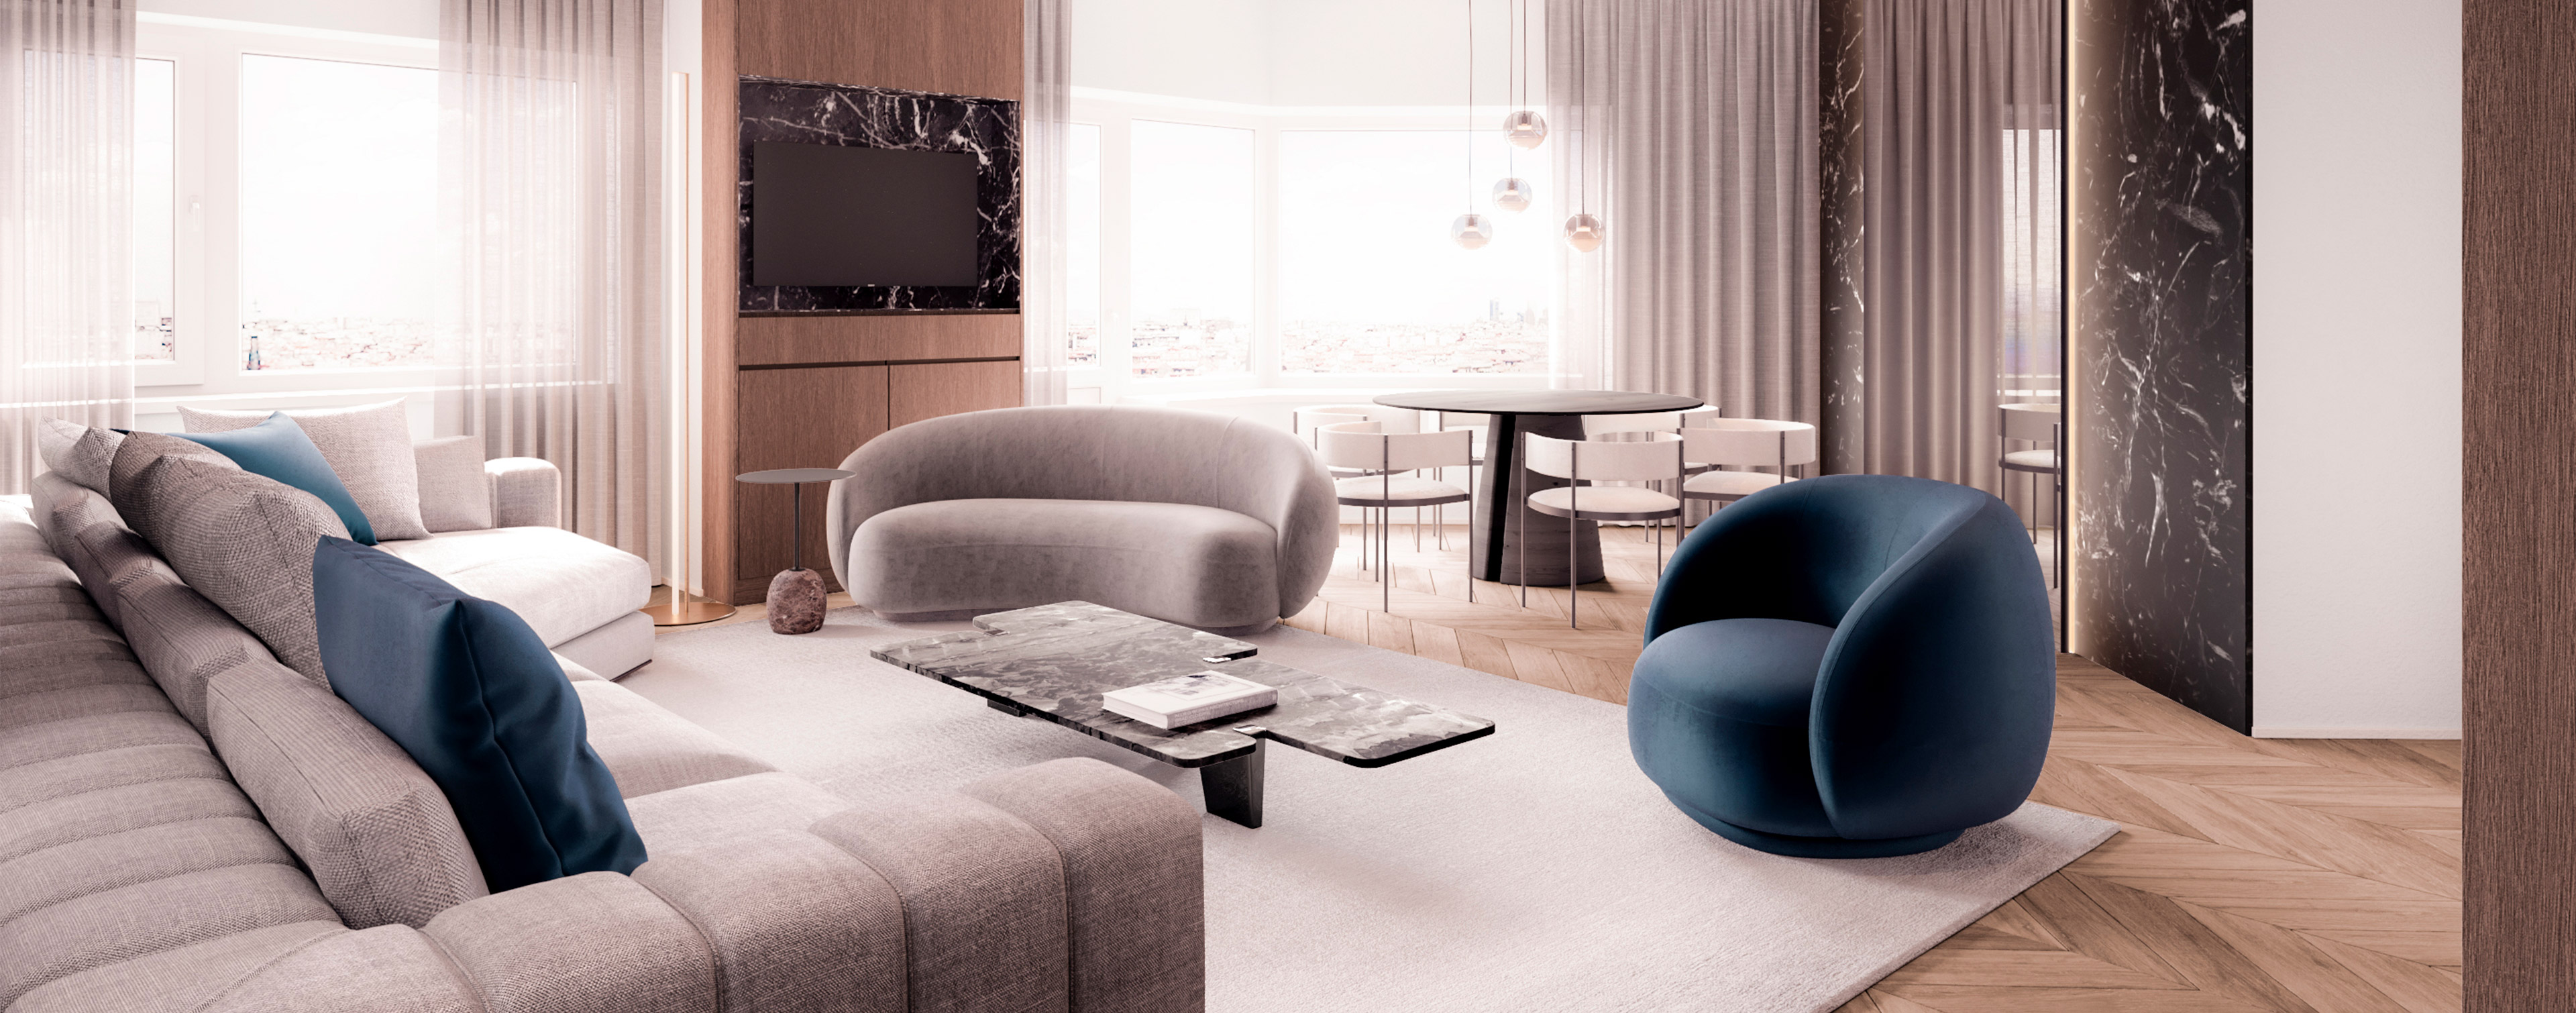 luv studio luxury architects madrid torre madrid apartment IMG 01 - Torre Madrid Apartment 